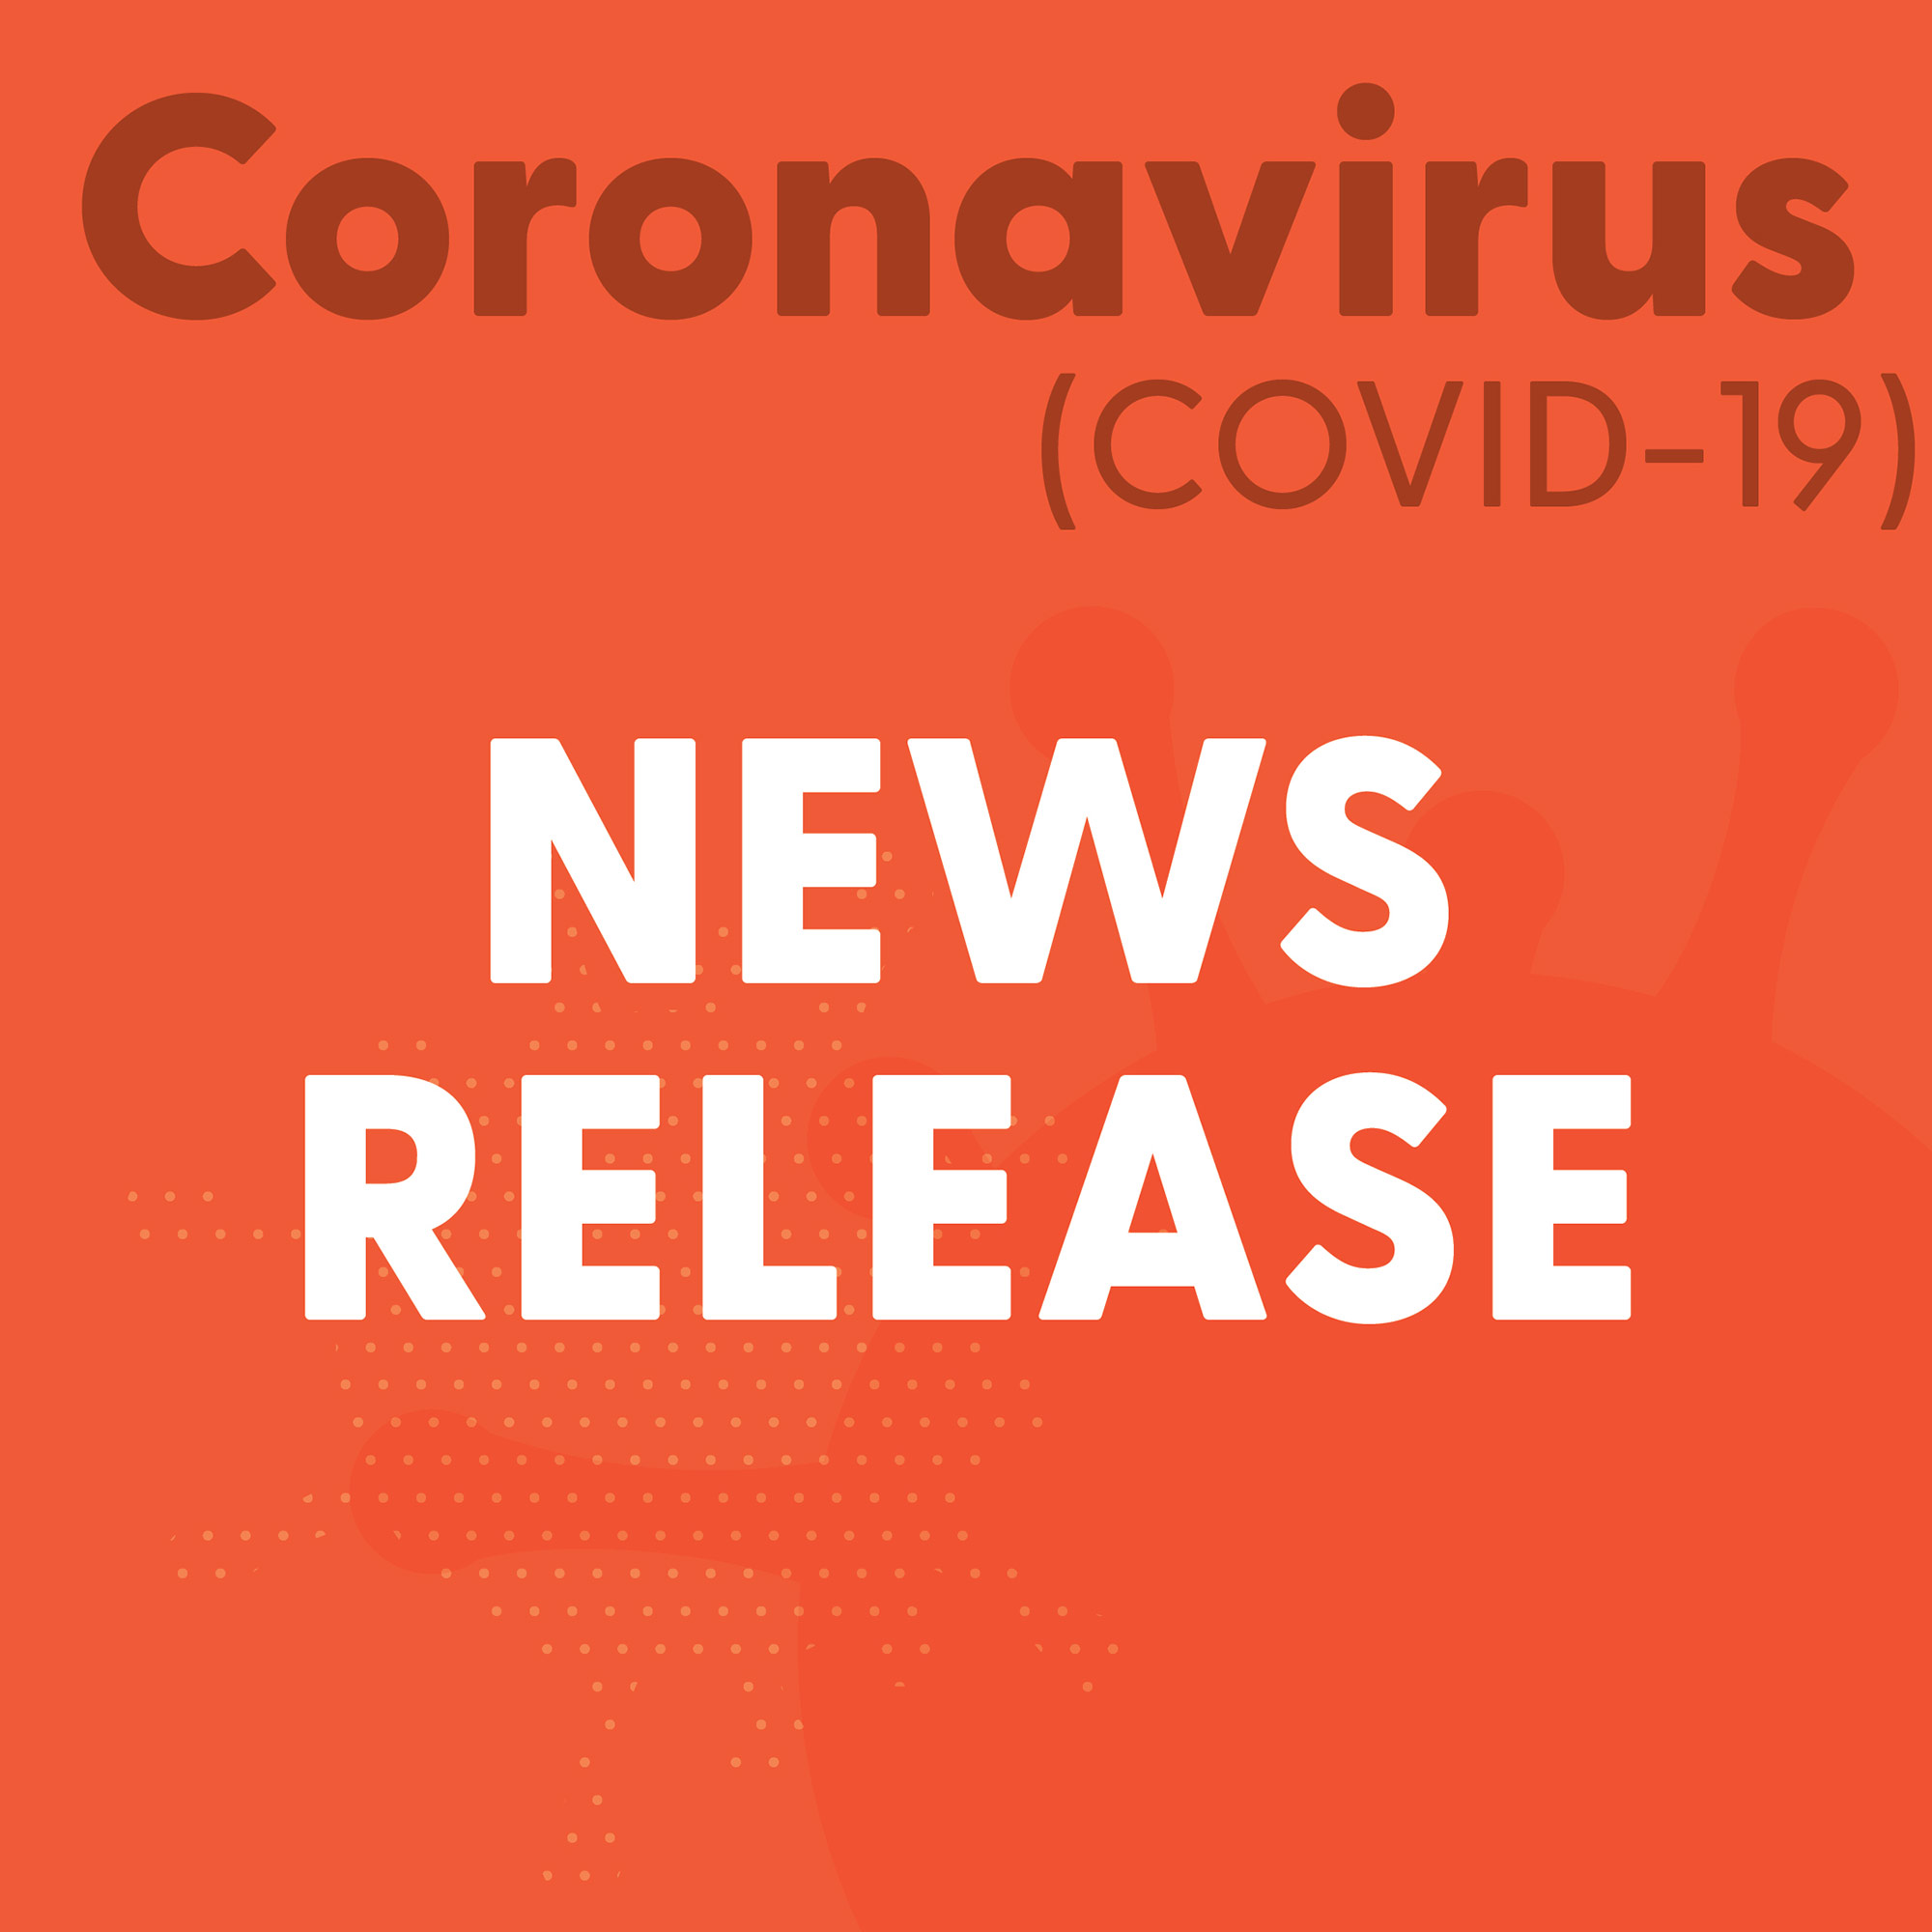 text reads Coronavirus (COVID-19) News Release